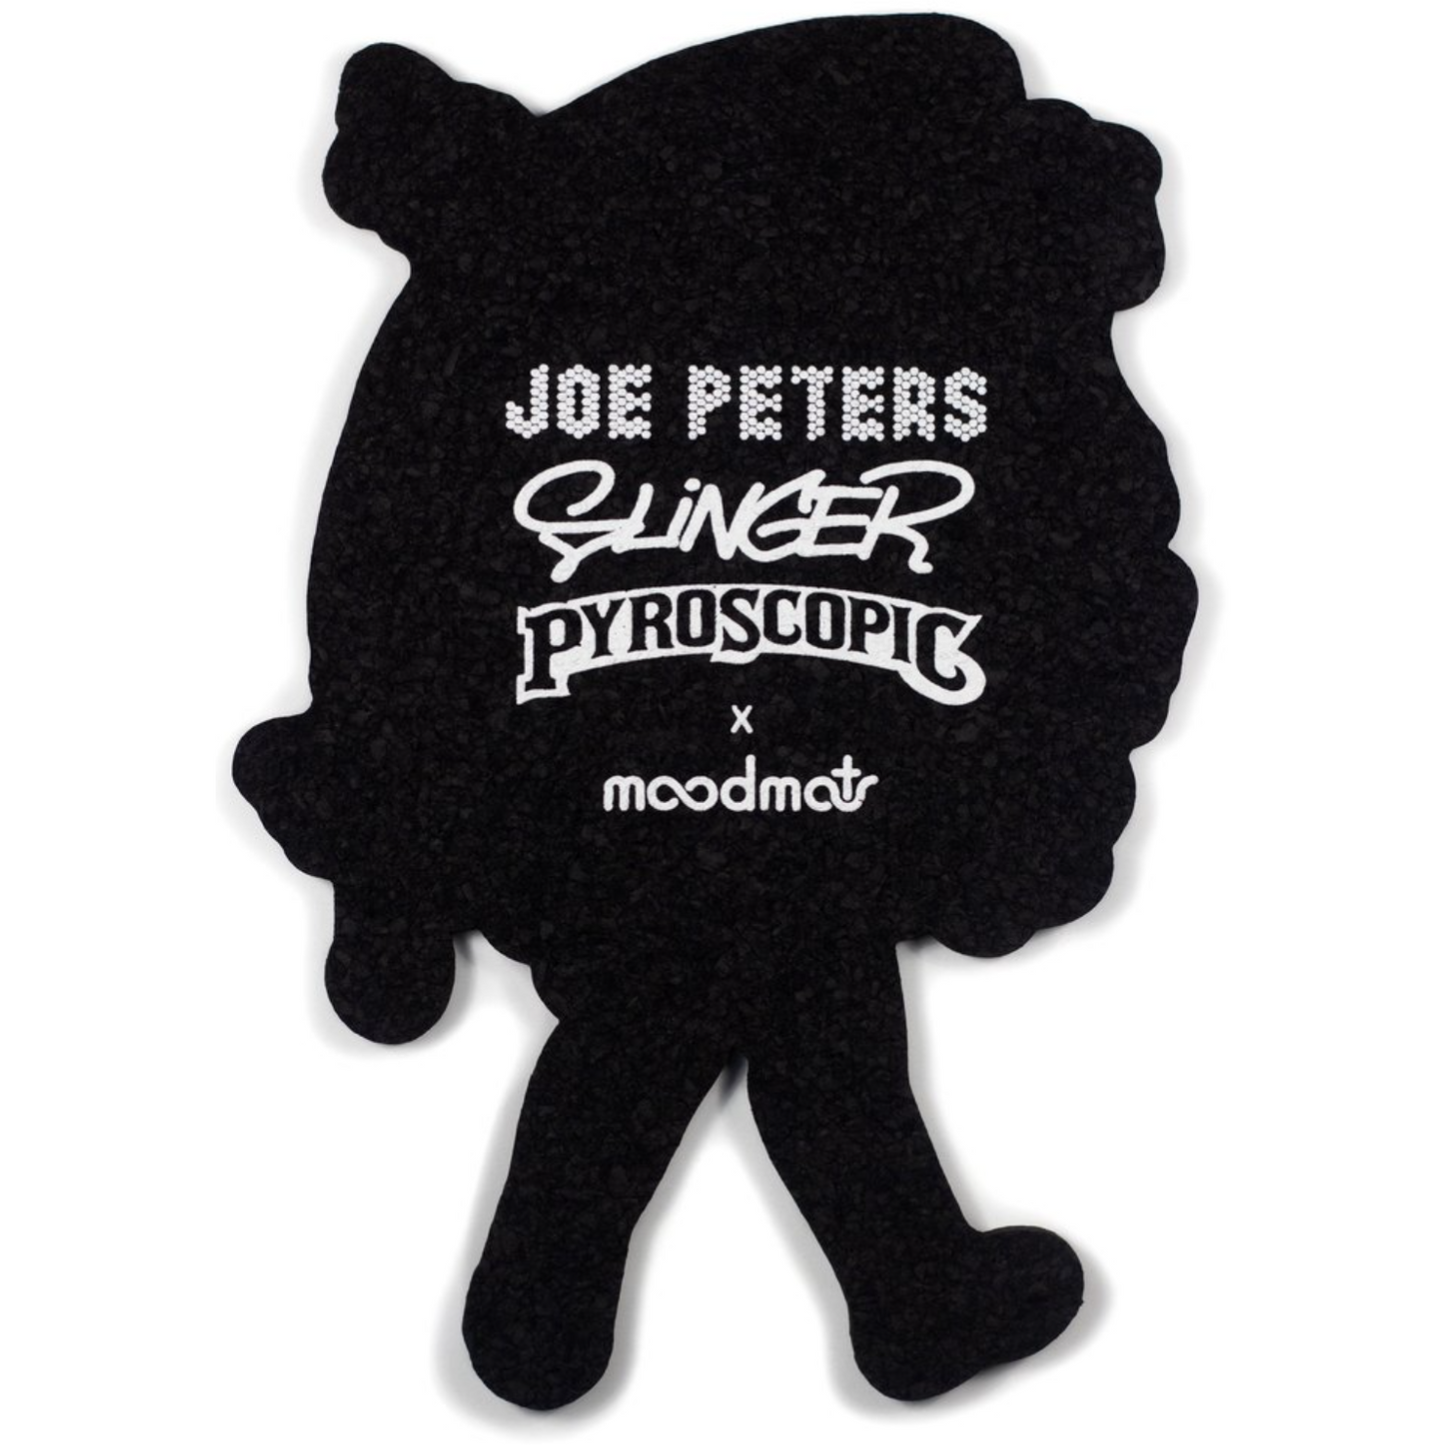 Joe Peters x Slinger x Pyroscopic "Honey Girl" Moodmat